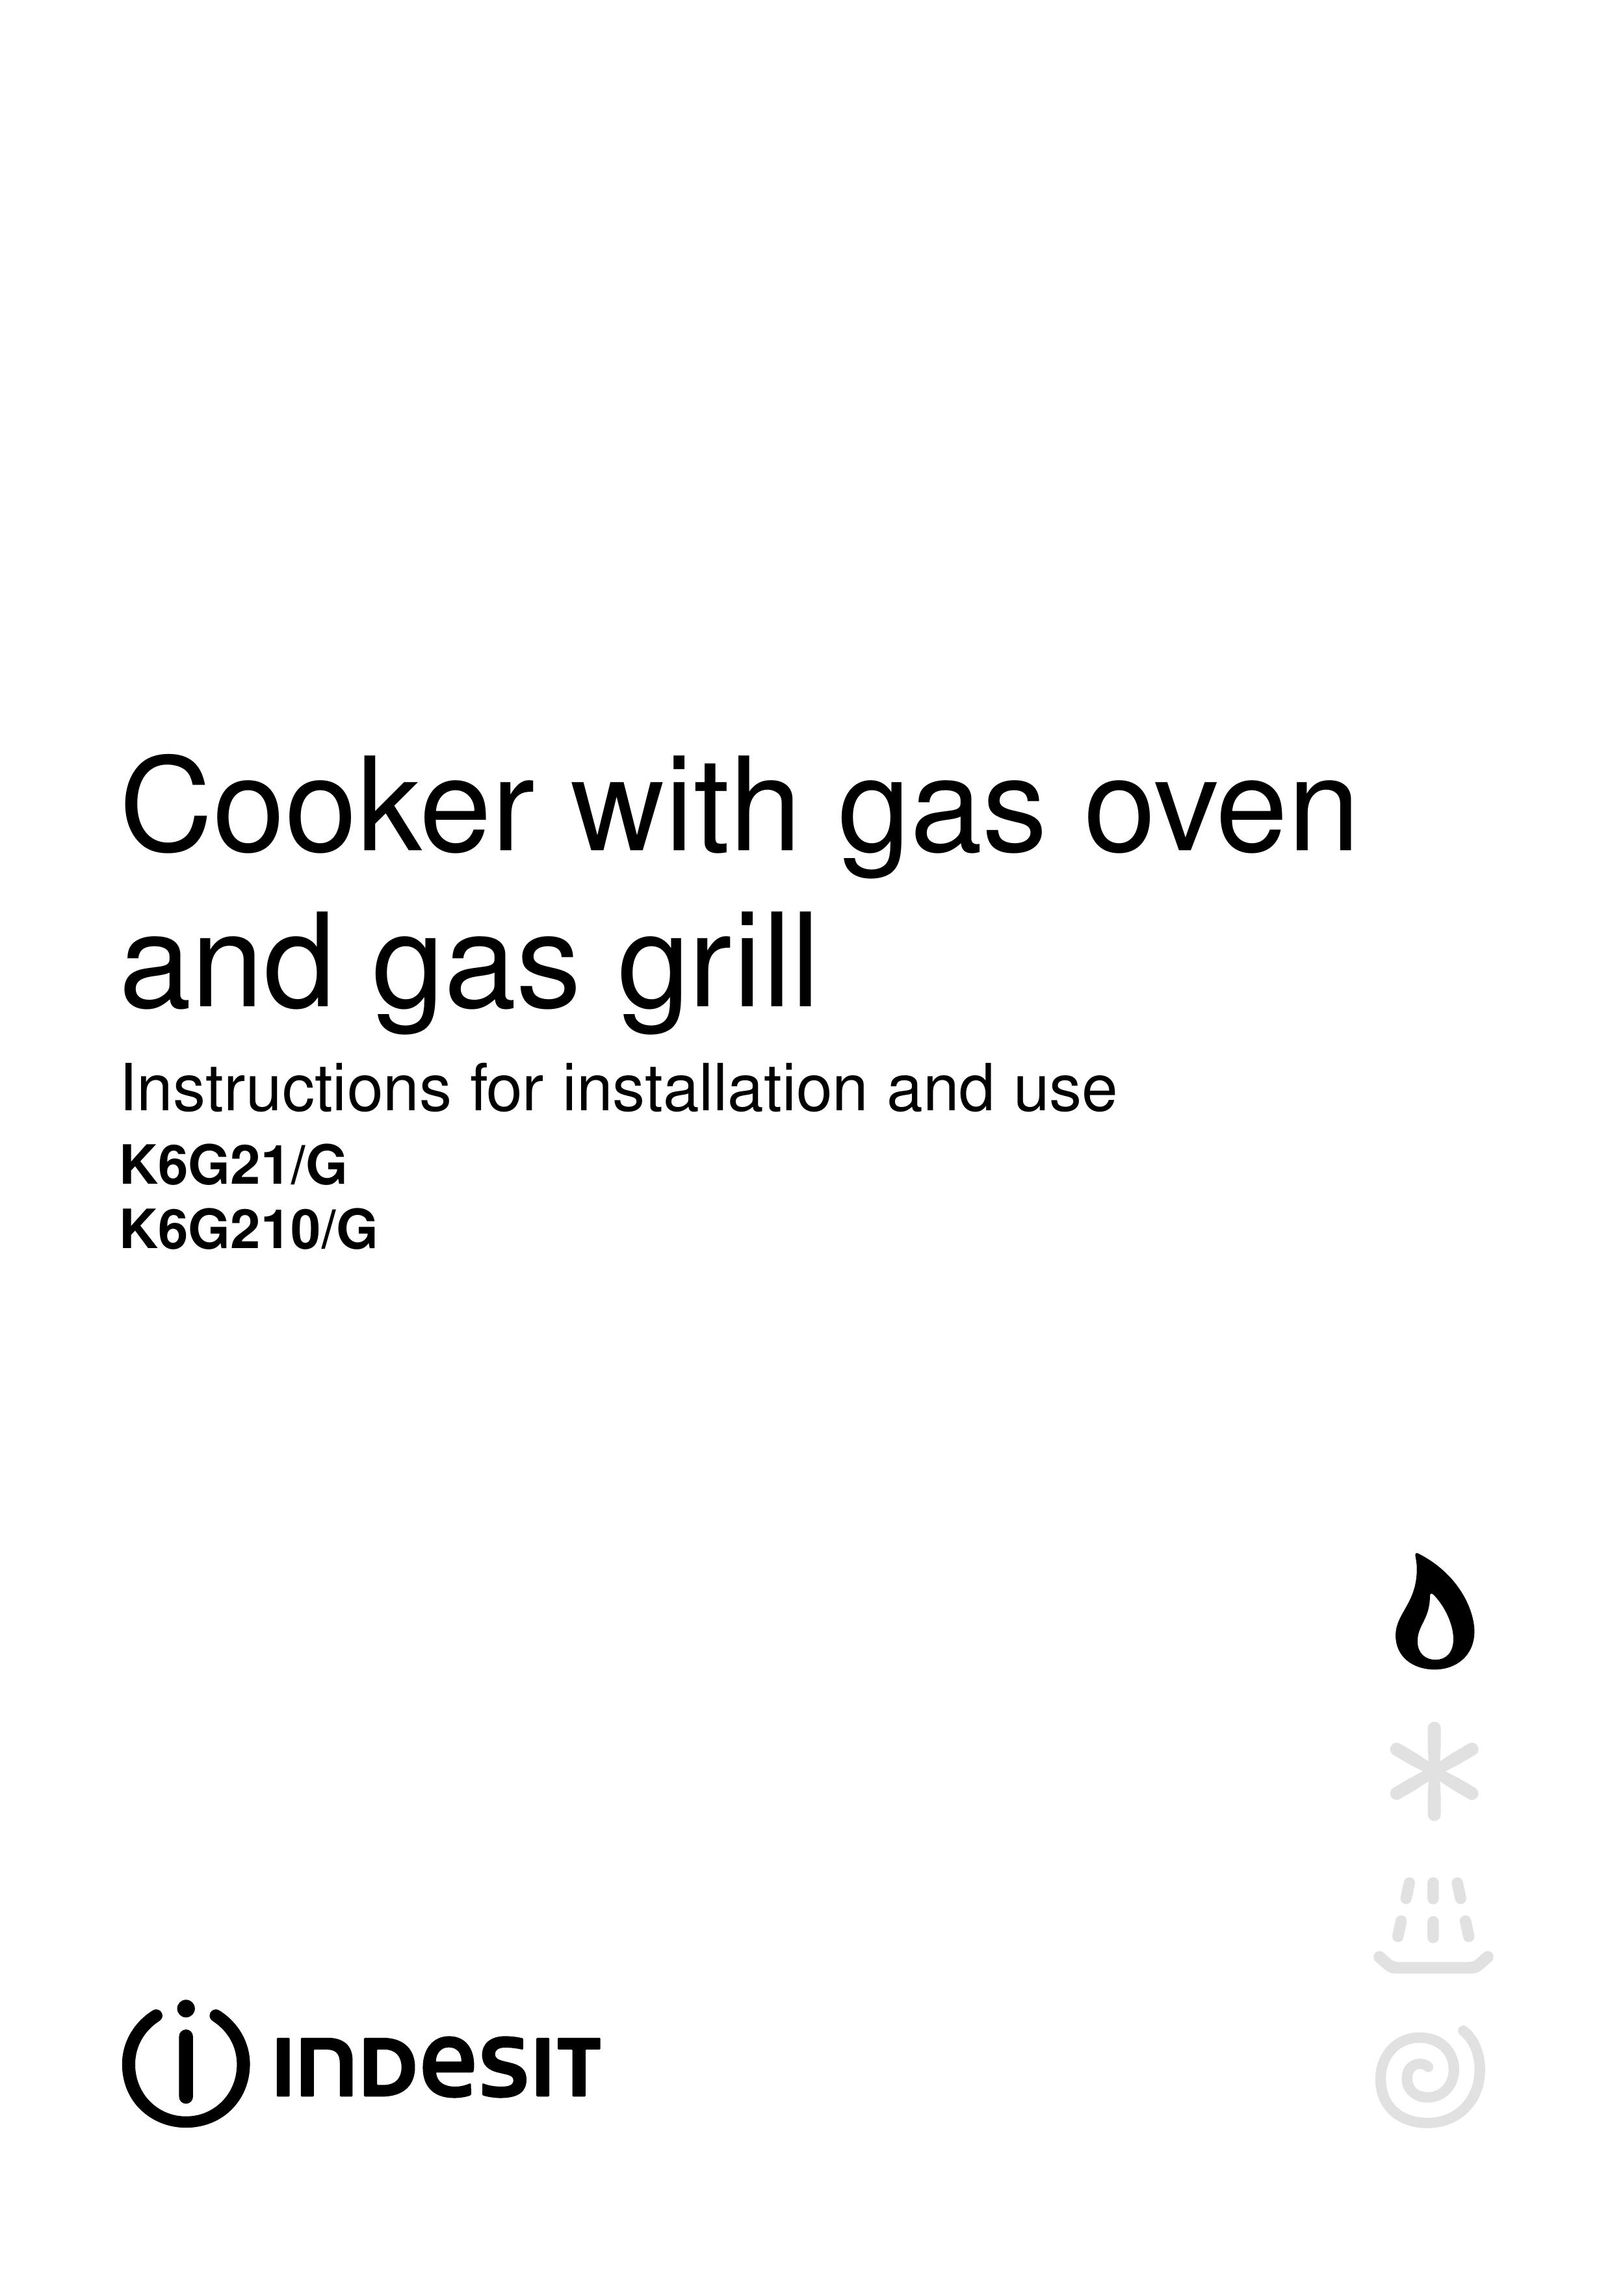 Indesit K6G21/G Cooktop User Manual